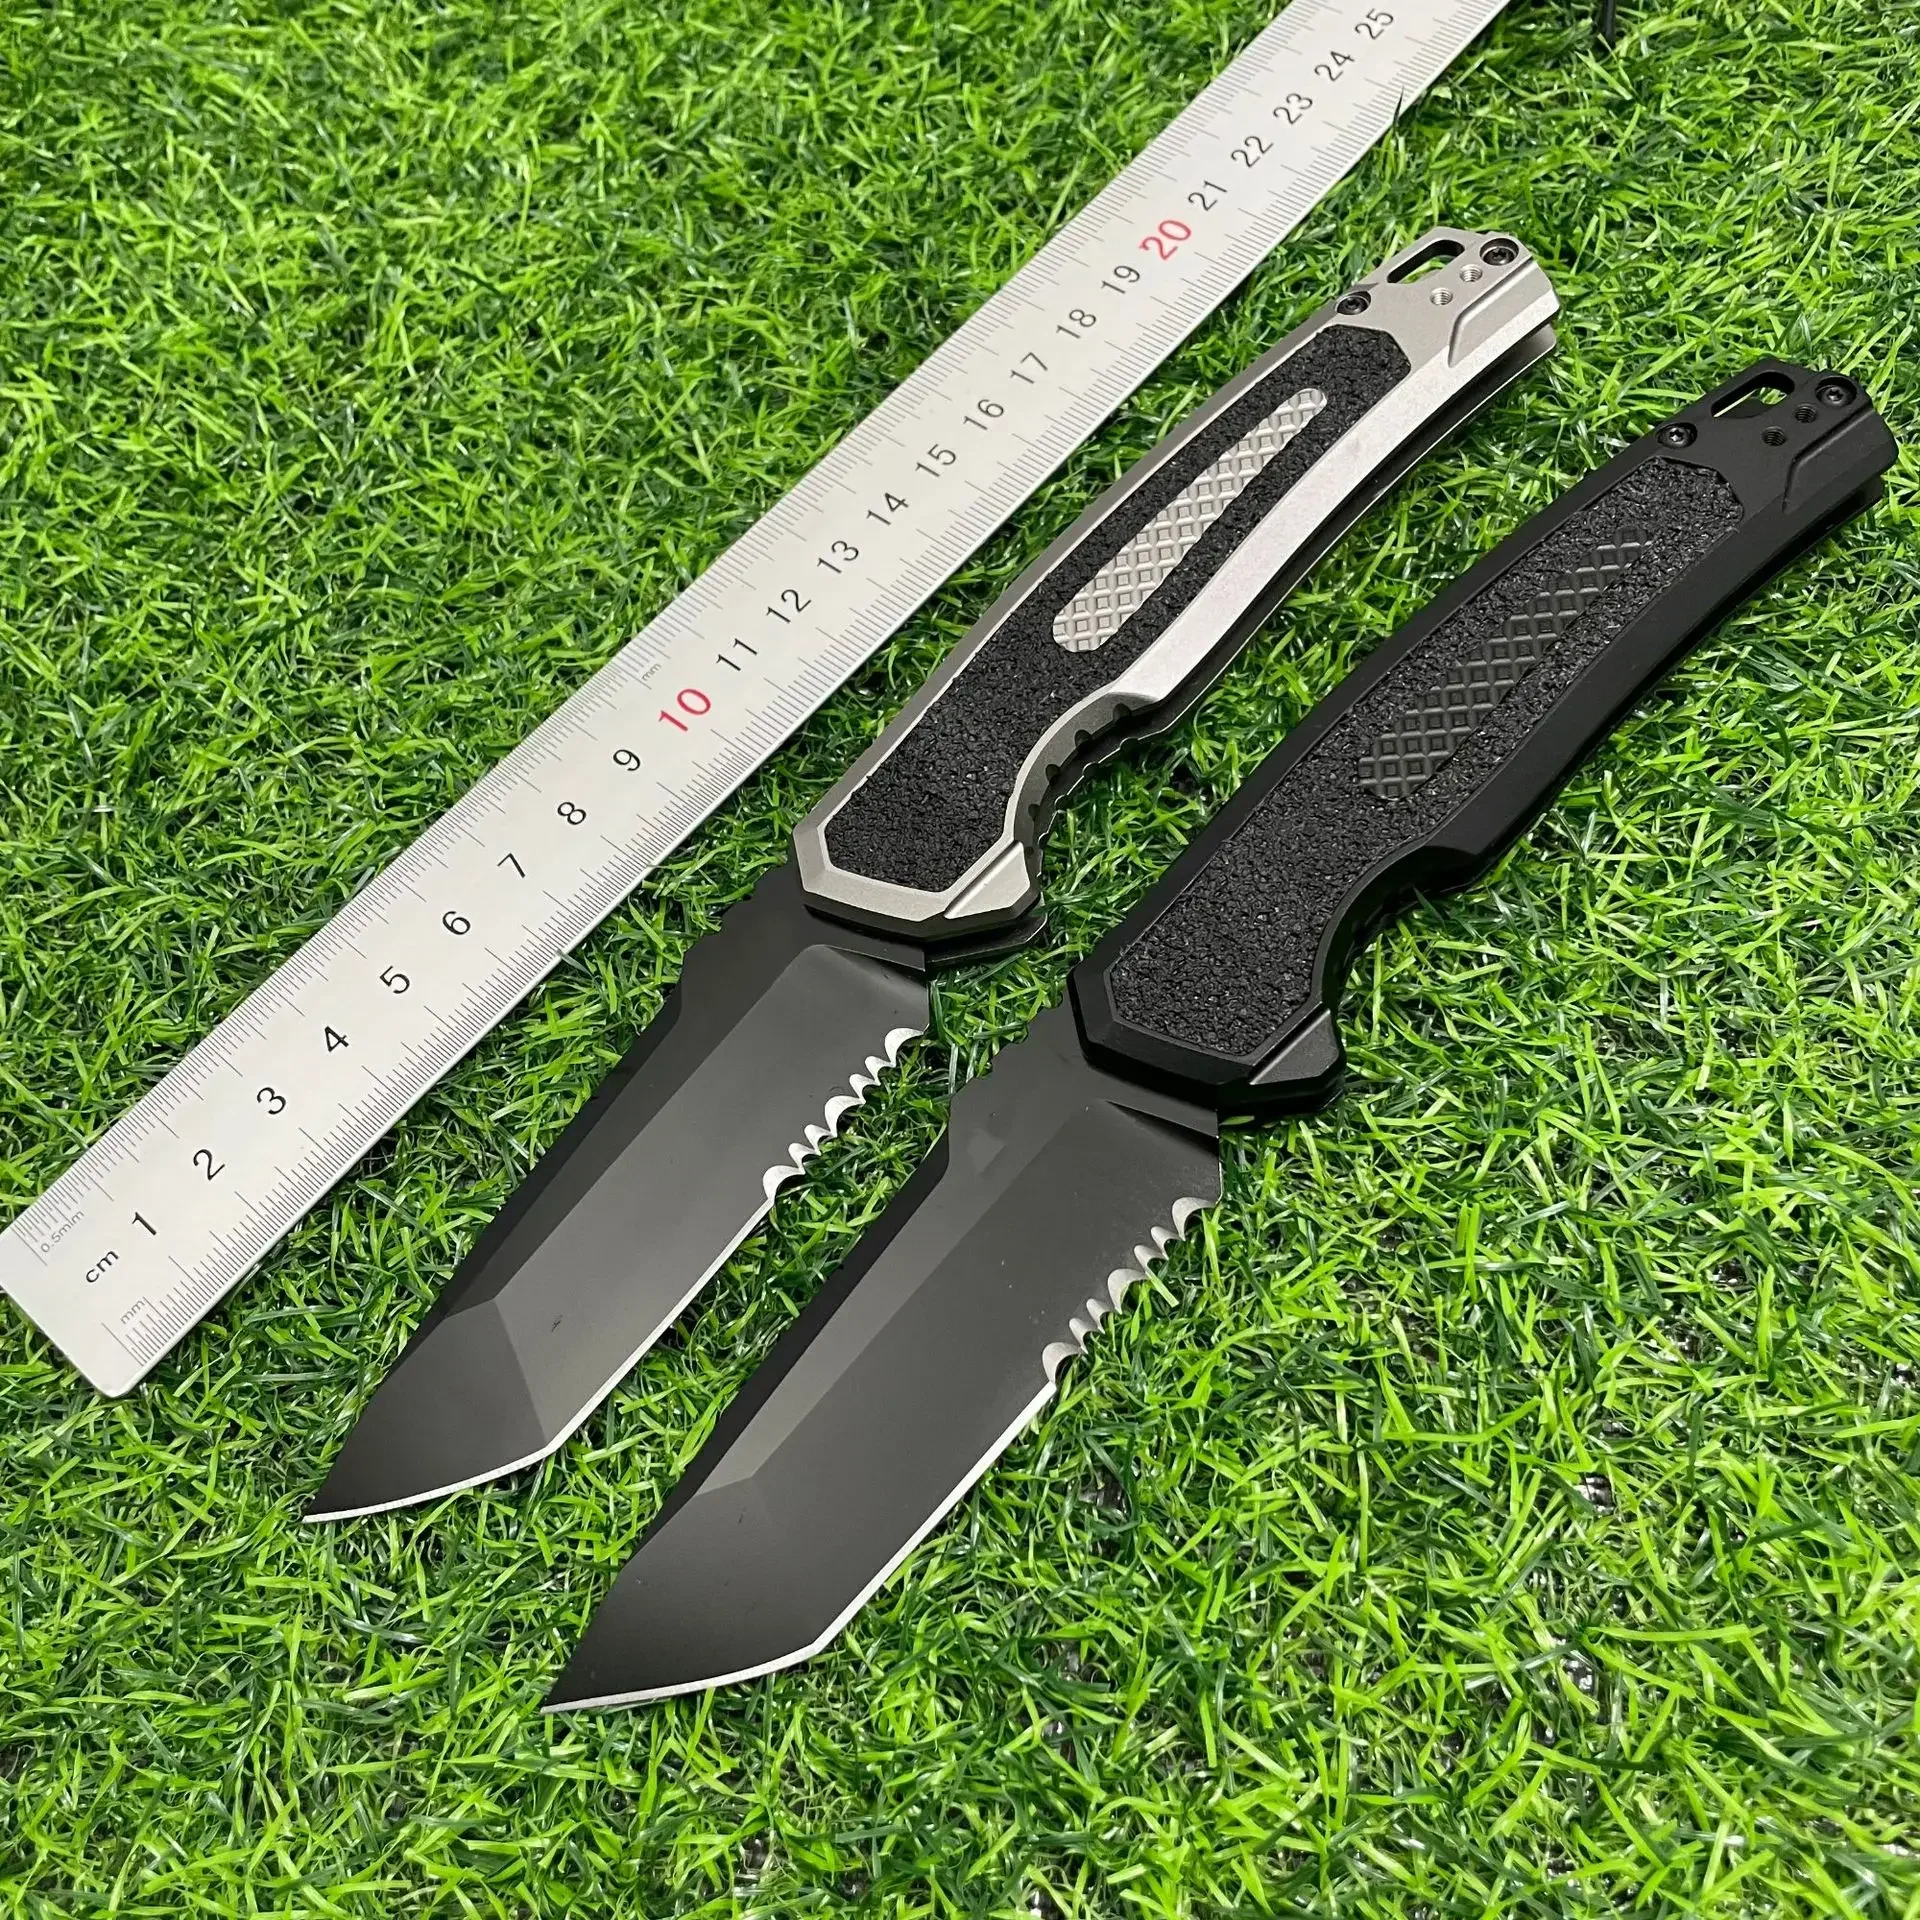 

KS 7105 High Hardness Folding Pocket Knife Camping Outdoor Self-defense Survival Tactical Knife EDC Tools for Man Gift